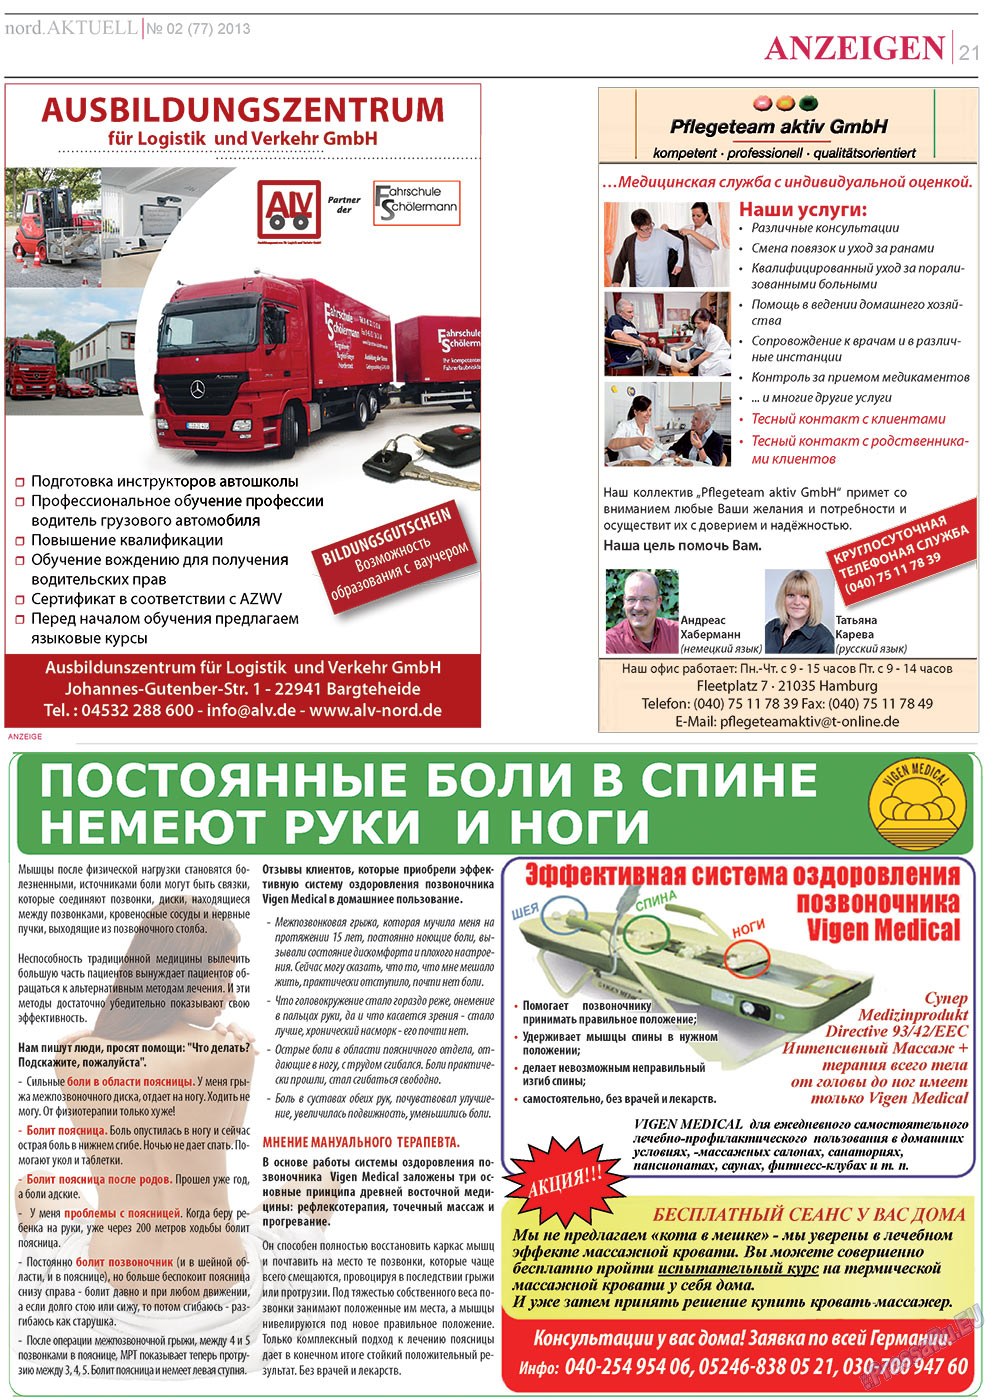 nord.Aktuell (газета). 2013 год, номер 2, стр. 21